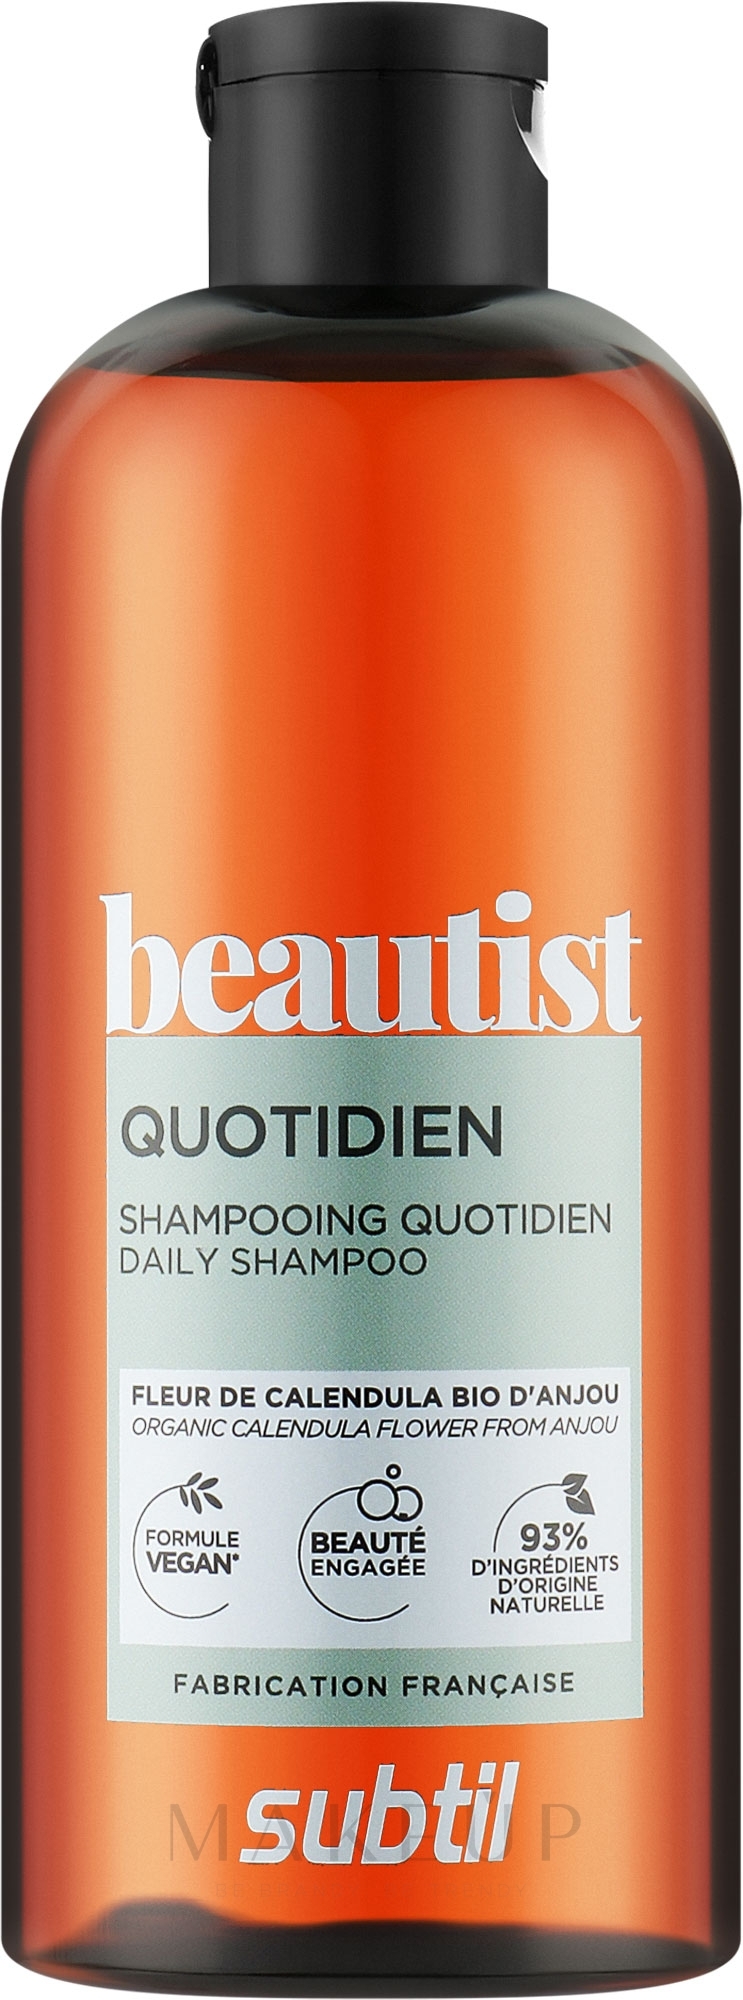 Tägliches Haarshampoo - Laboratoire Ducastel Subtil Beautist Daily Shampoo — Bild 300 ml